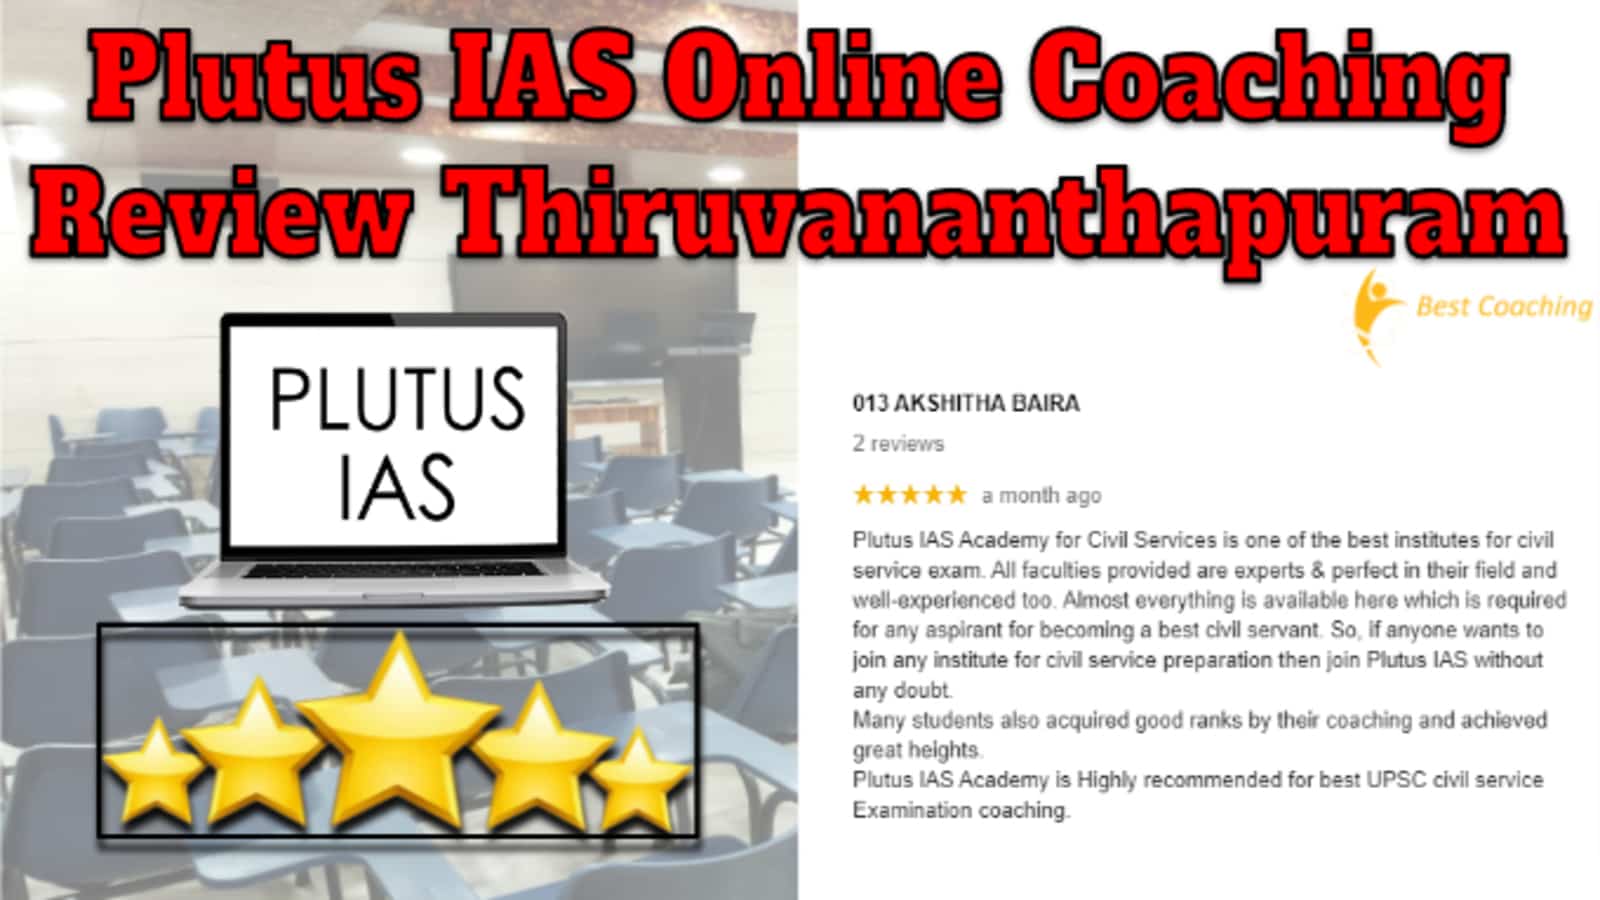 Plutus IAS Online Coaching Review Thiruvananthapuram